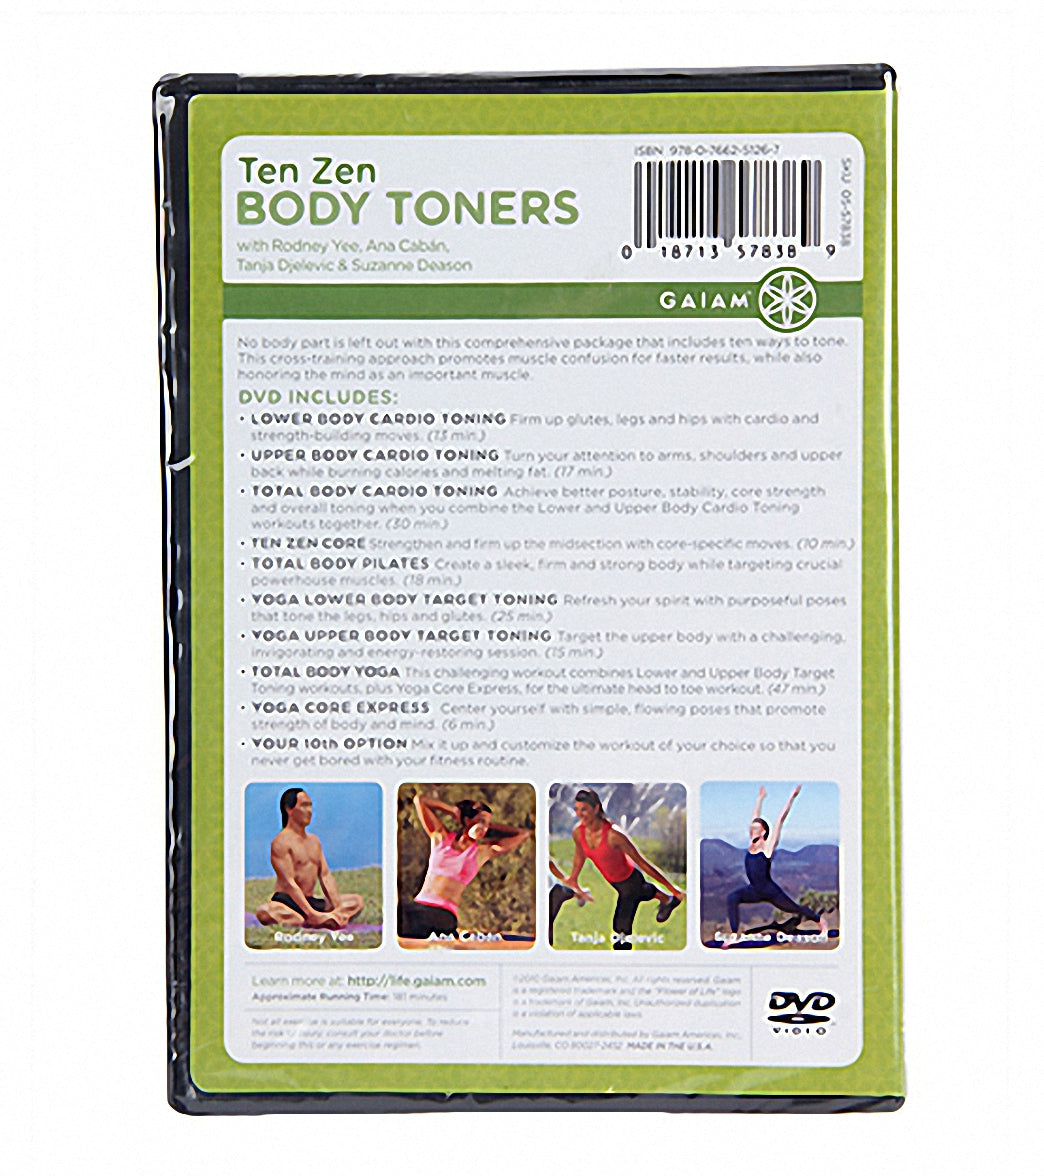 Gaiam Ten Zen Body Toners DVD